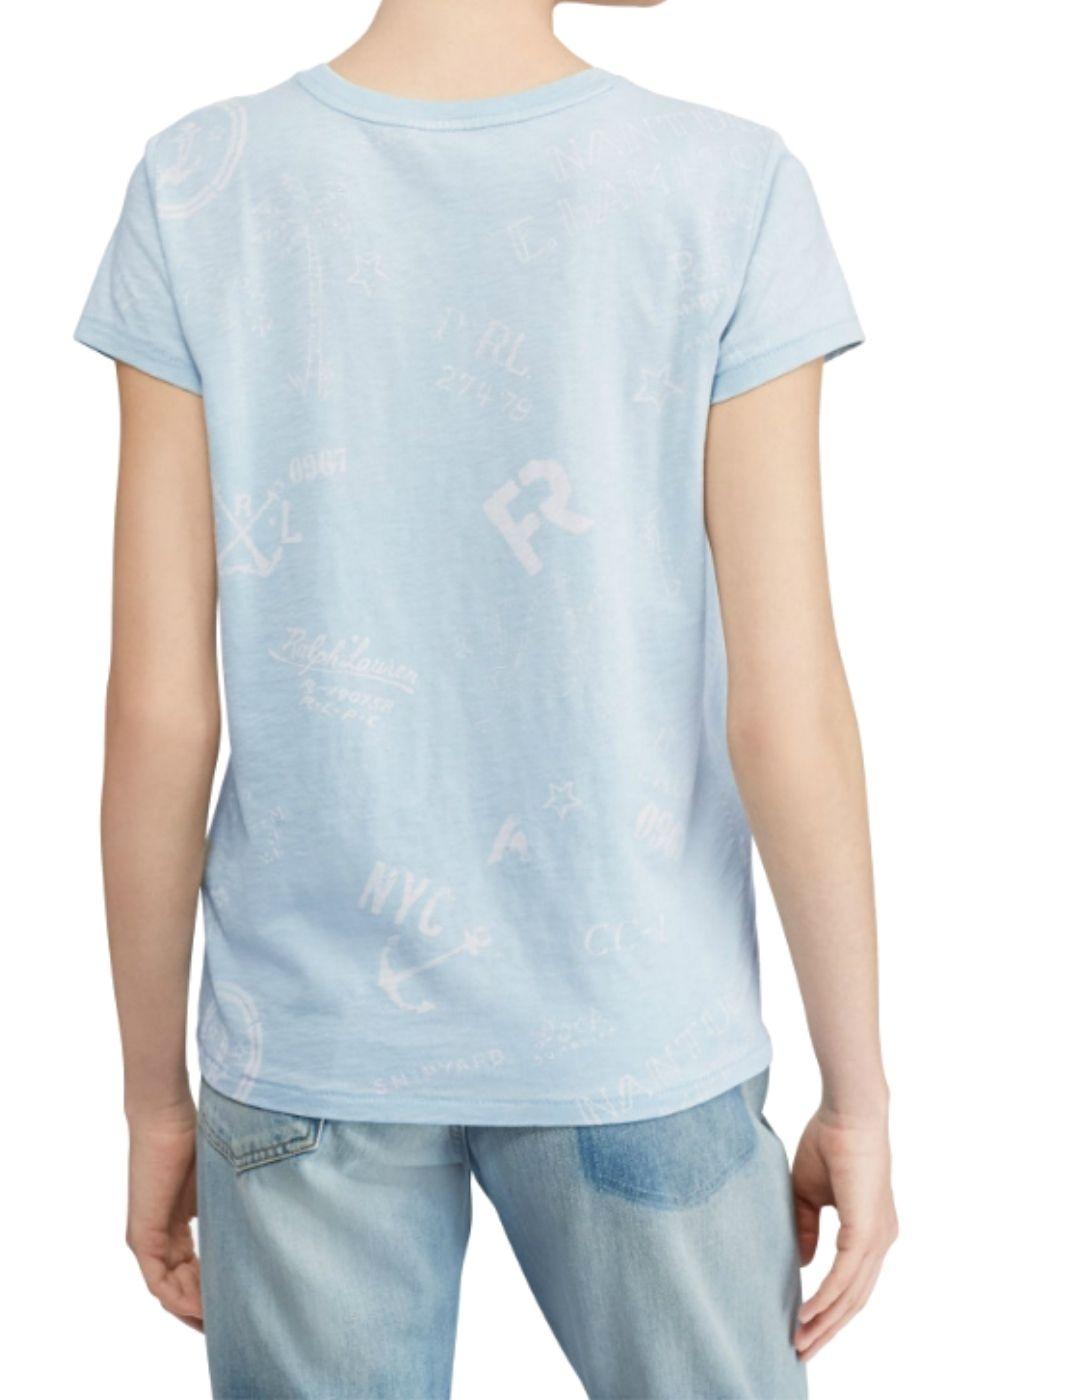 Camiseta Polo Ralph Lauren celeste para mujer manga corta